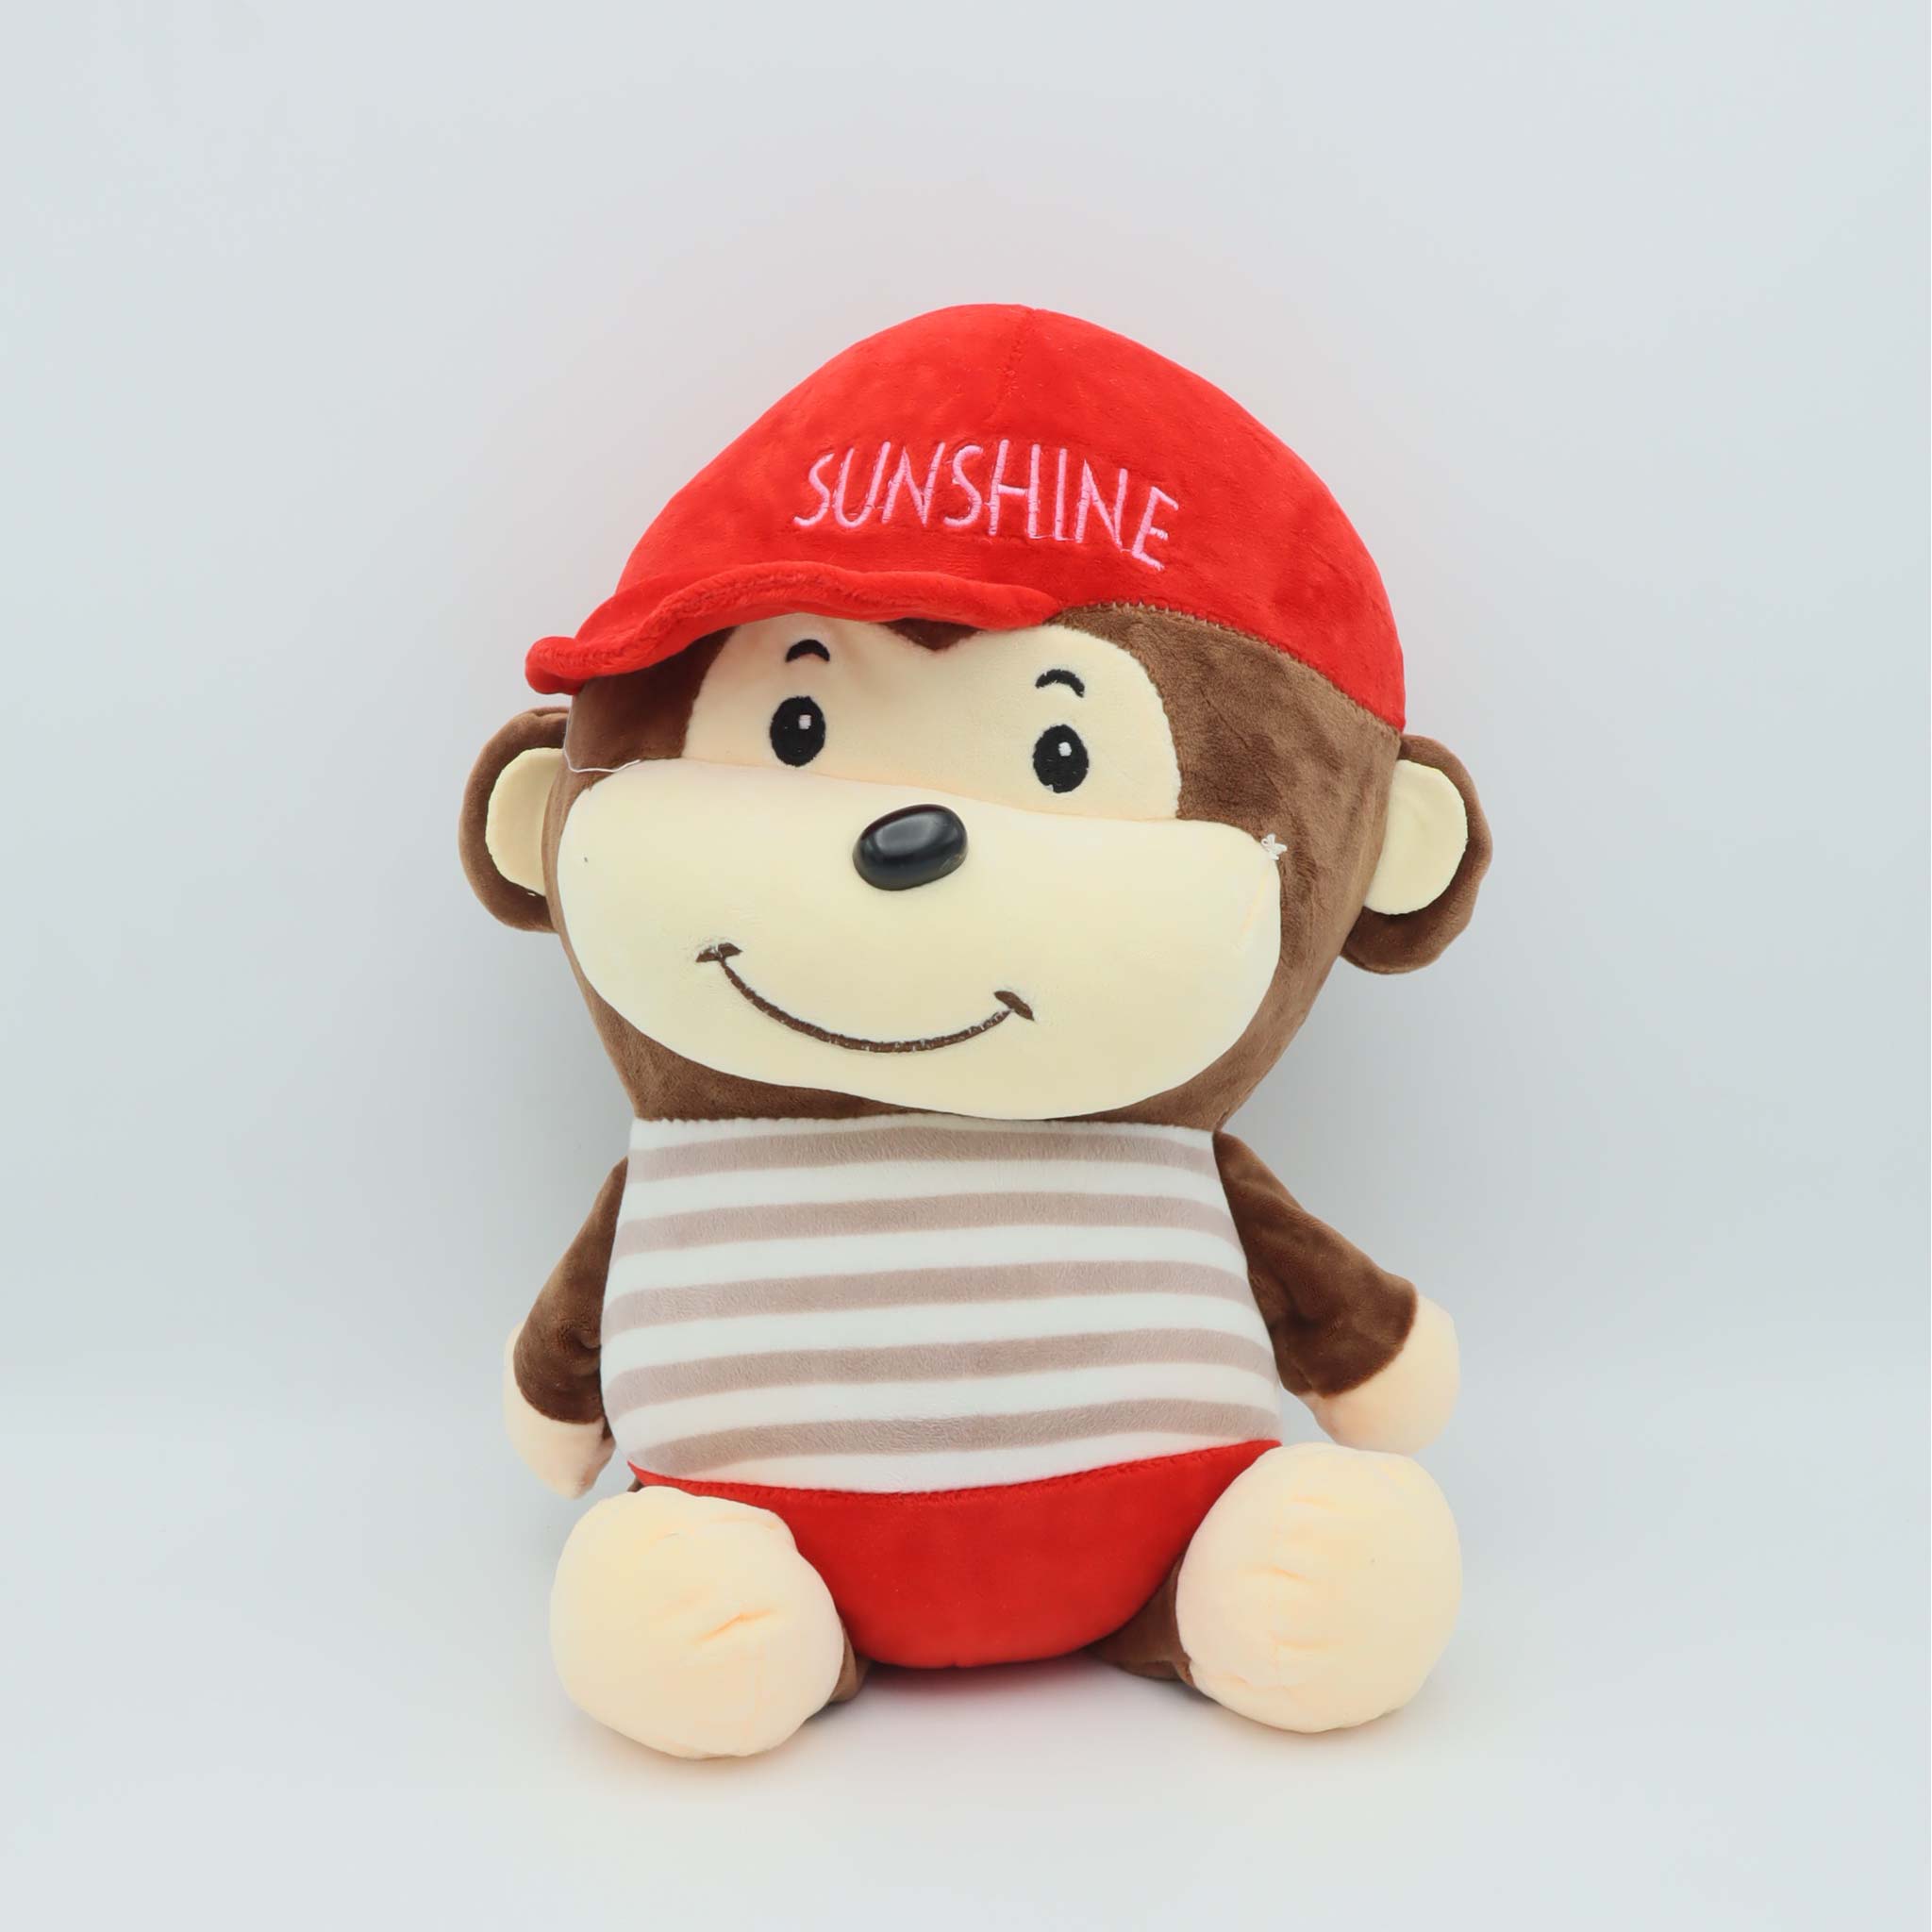 Cute Monkey Toy